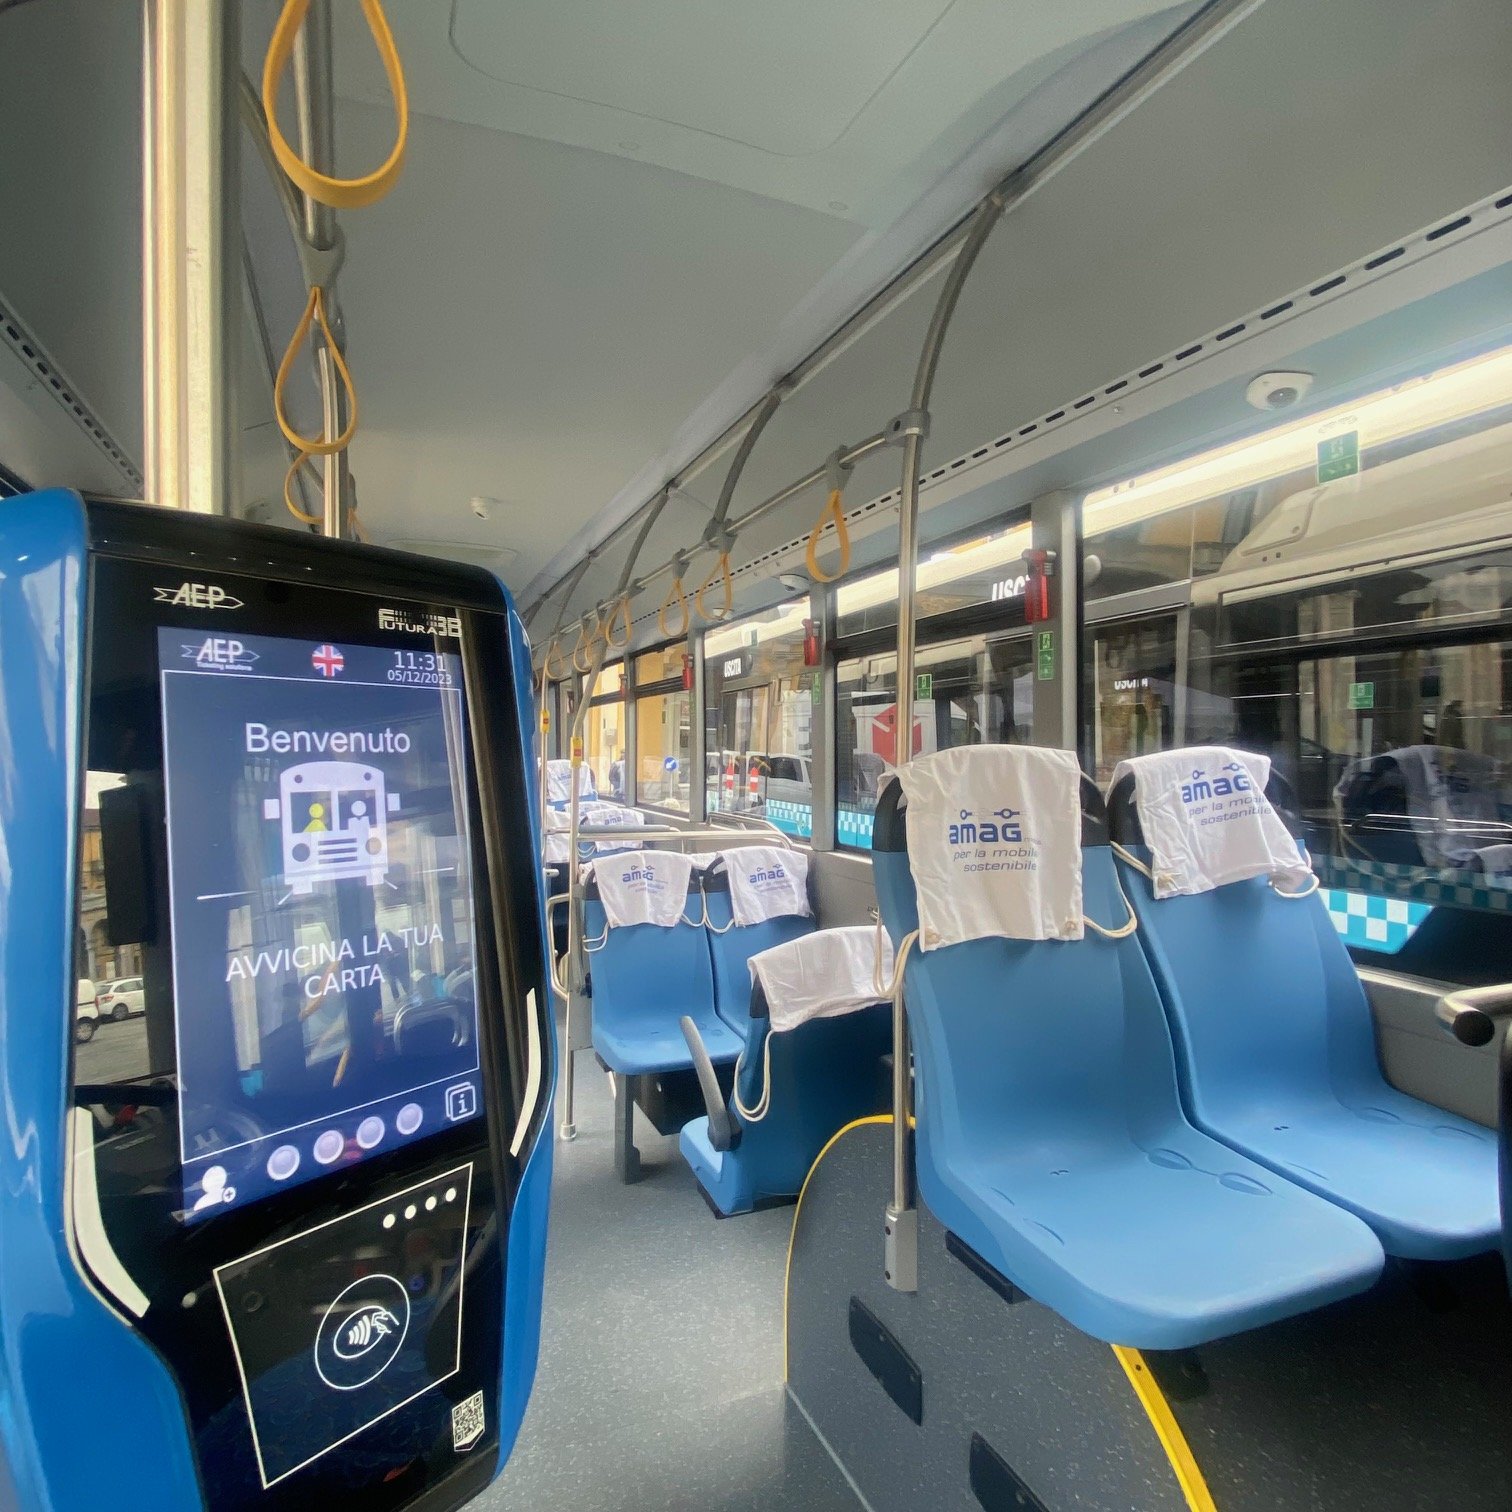 Amag Mobilità bus a metano 2023